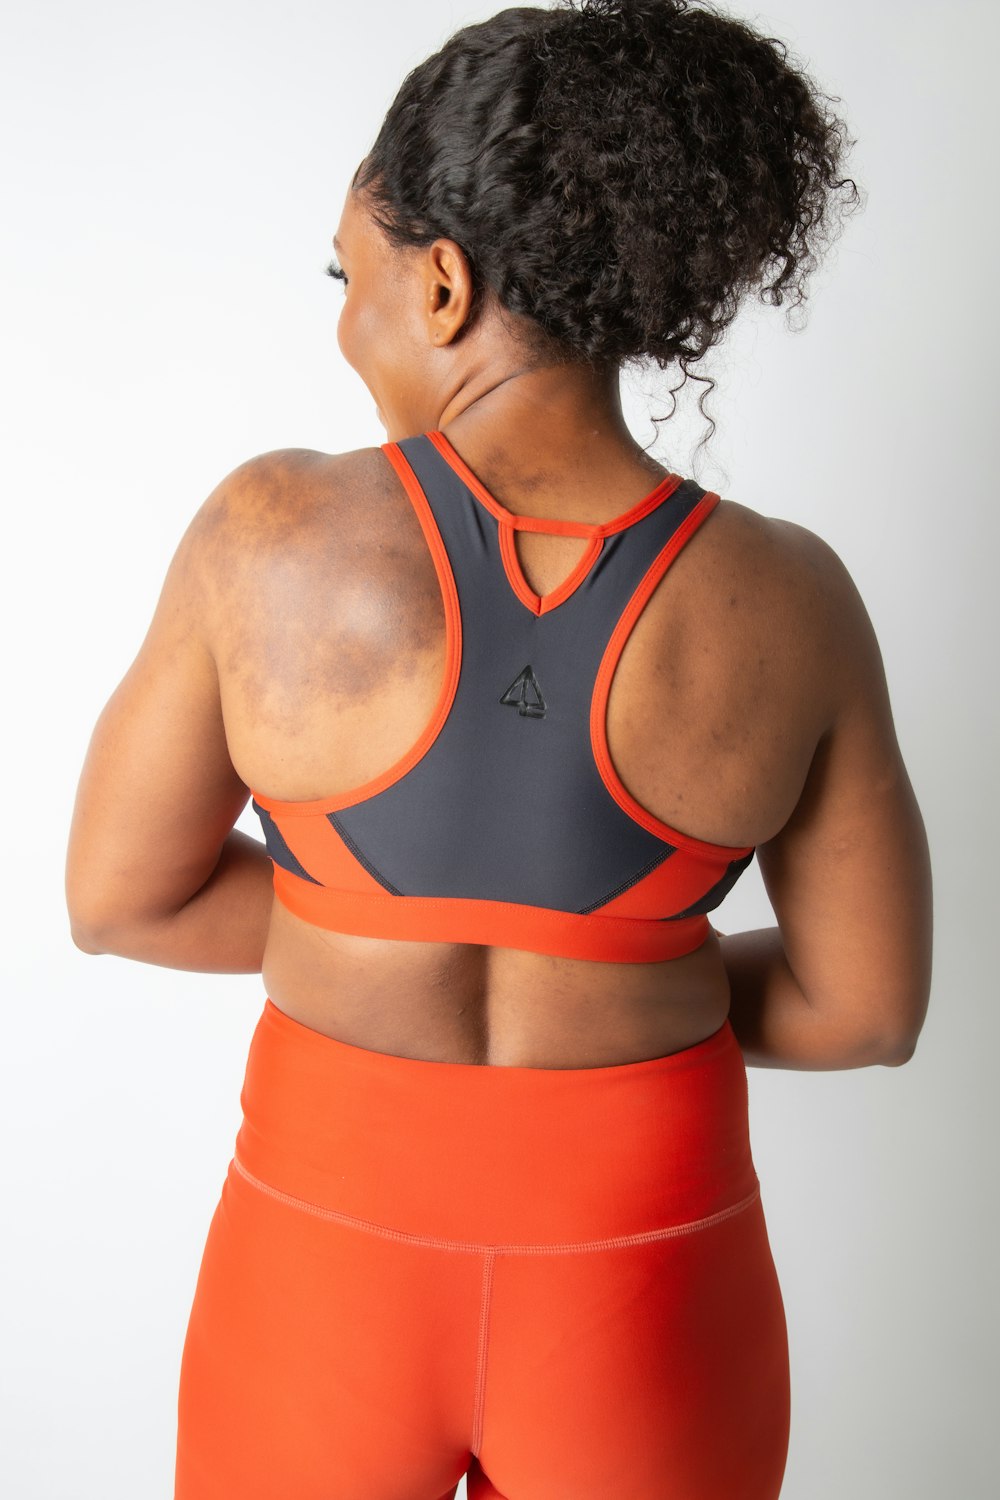 a woman in an orange sports bra top